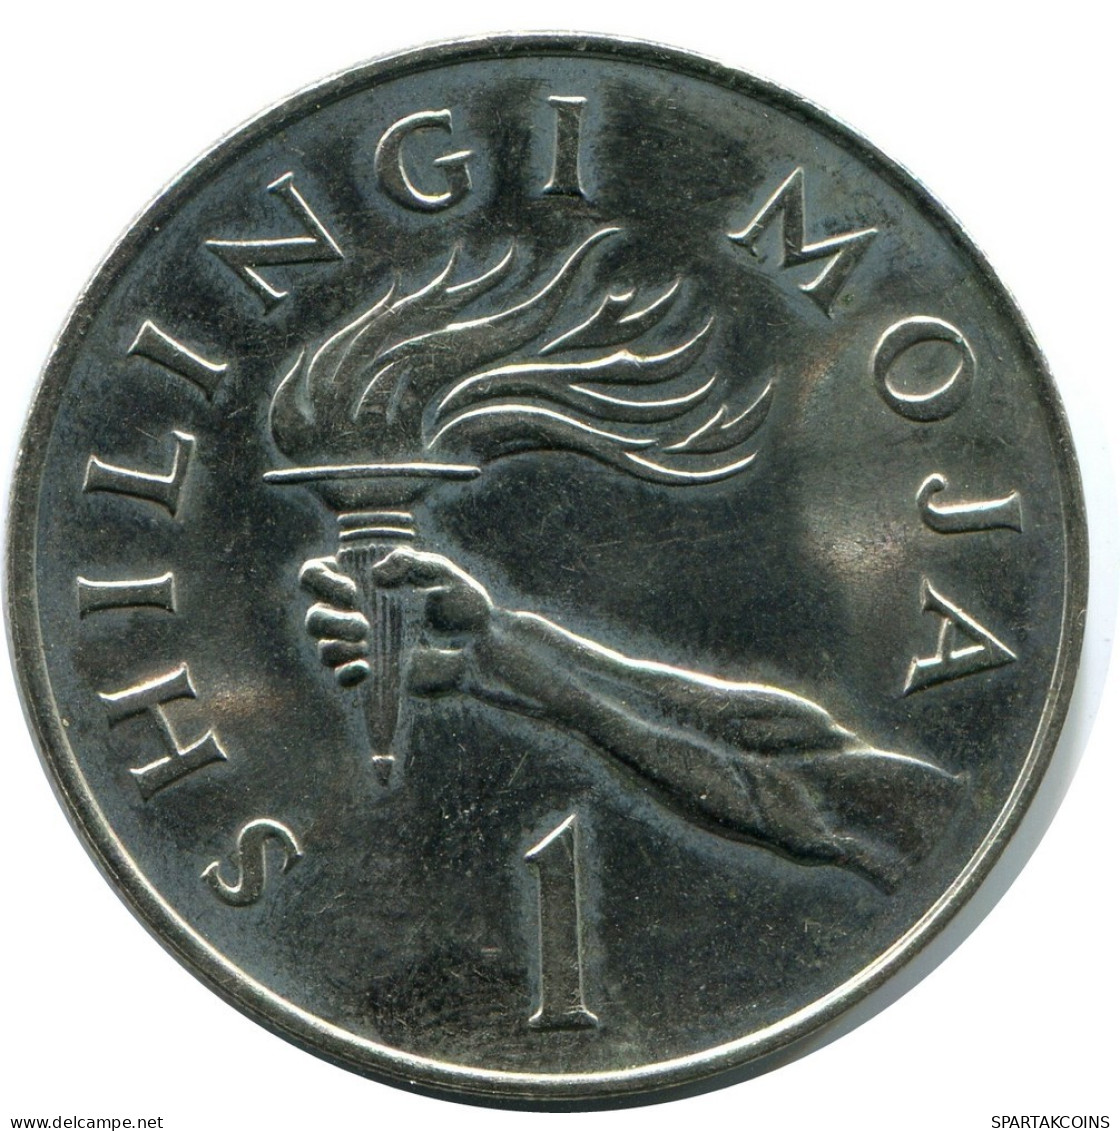 1 SHILINGI 1984 TANZANIA Coin #AZ088.U.A - Tanzanie